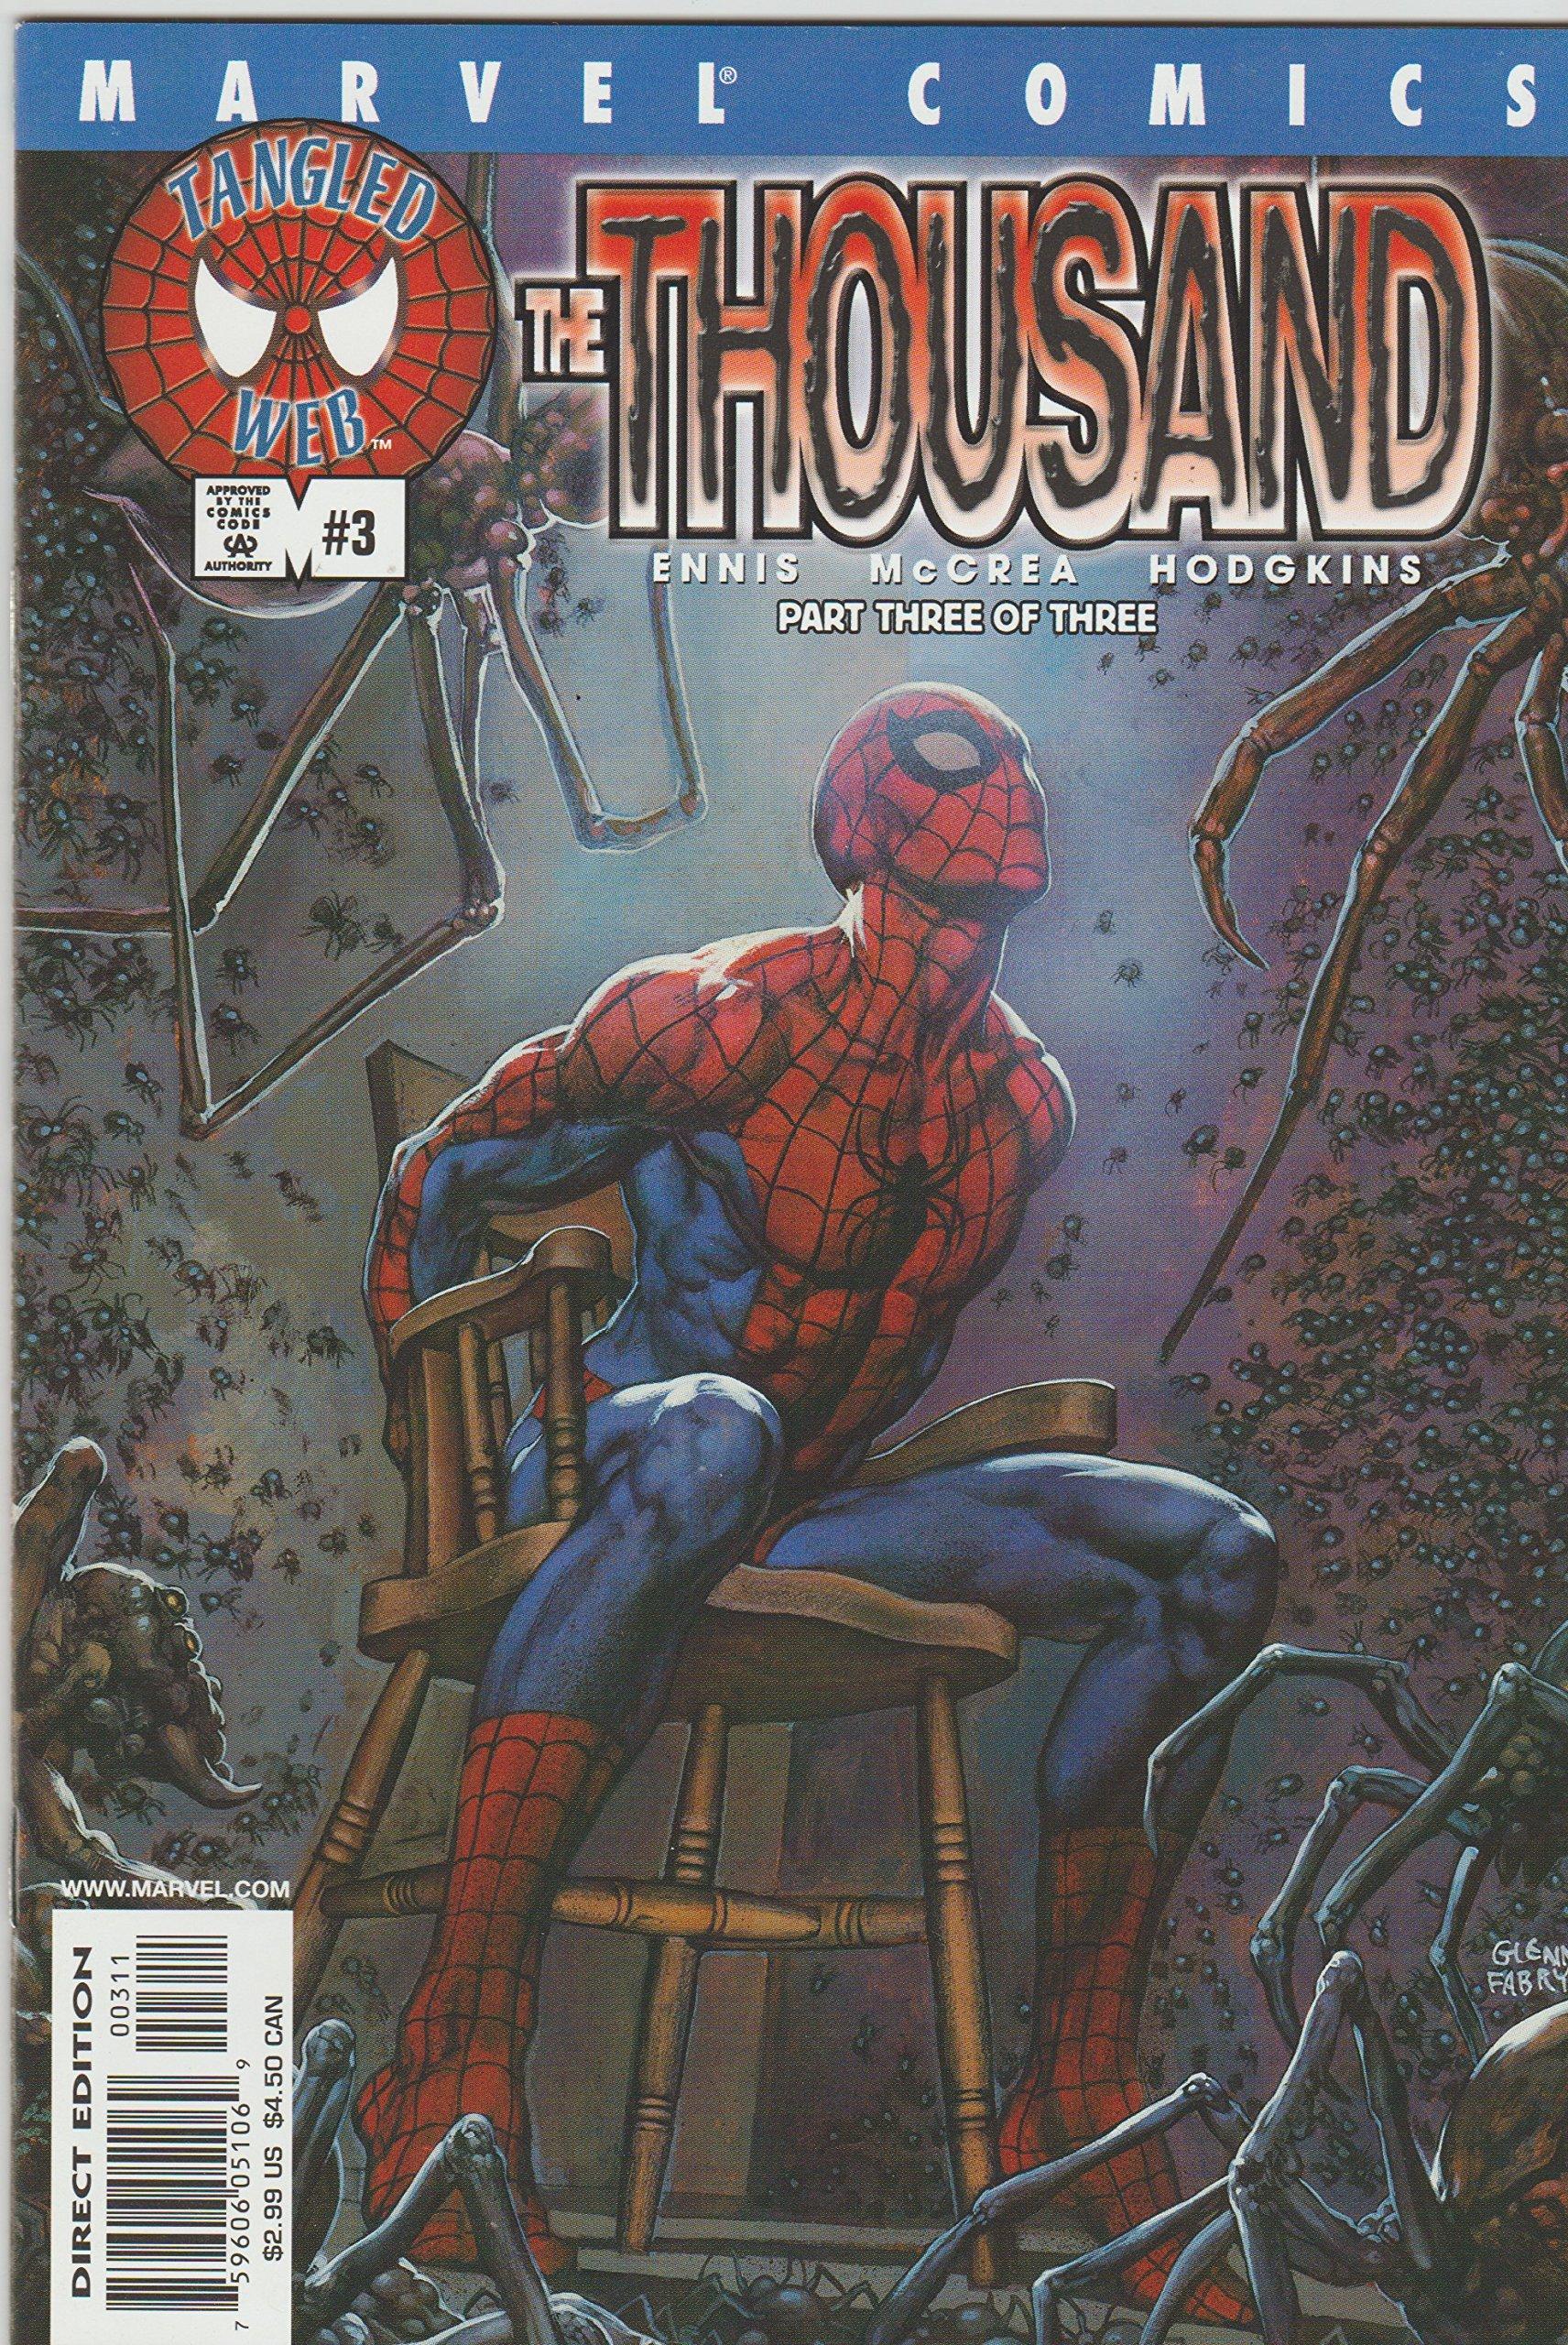 SPIDER-MAN. THE THOUSAND #1#2#3 - MARVEL COMICS (2001)